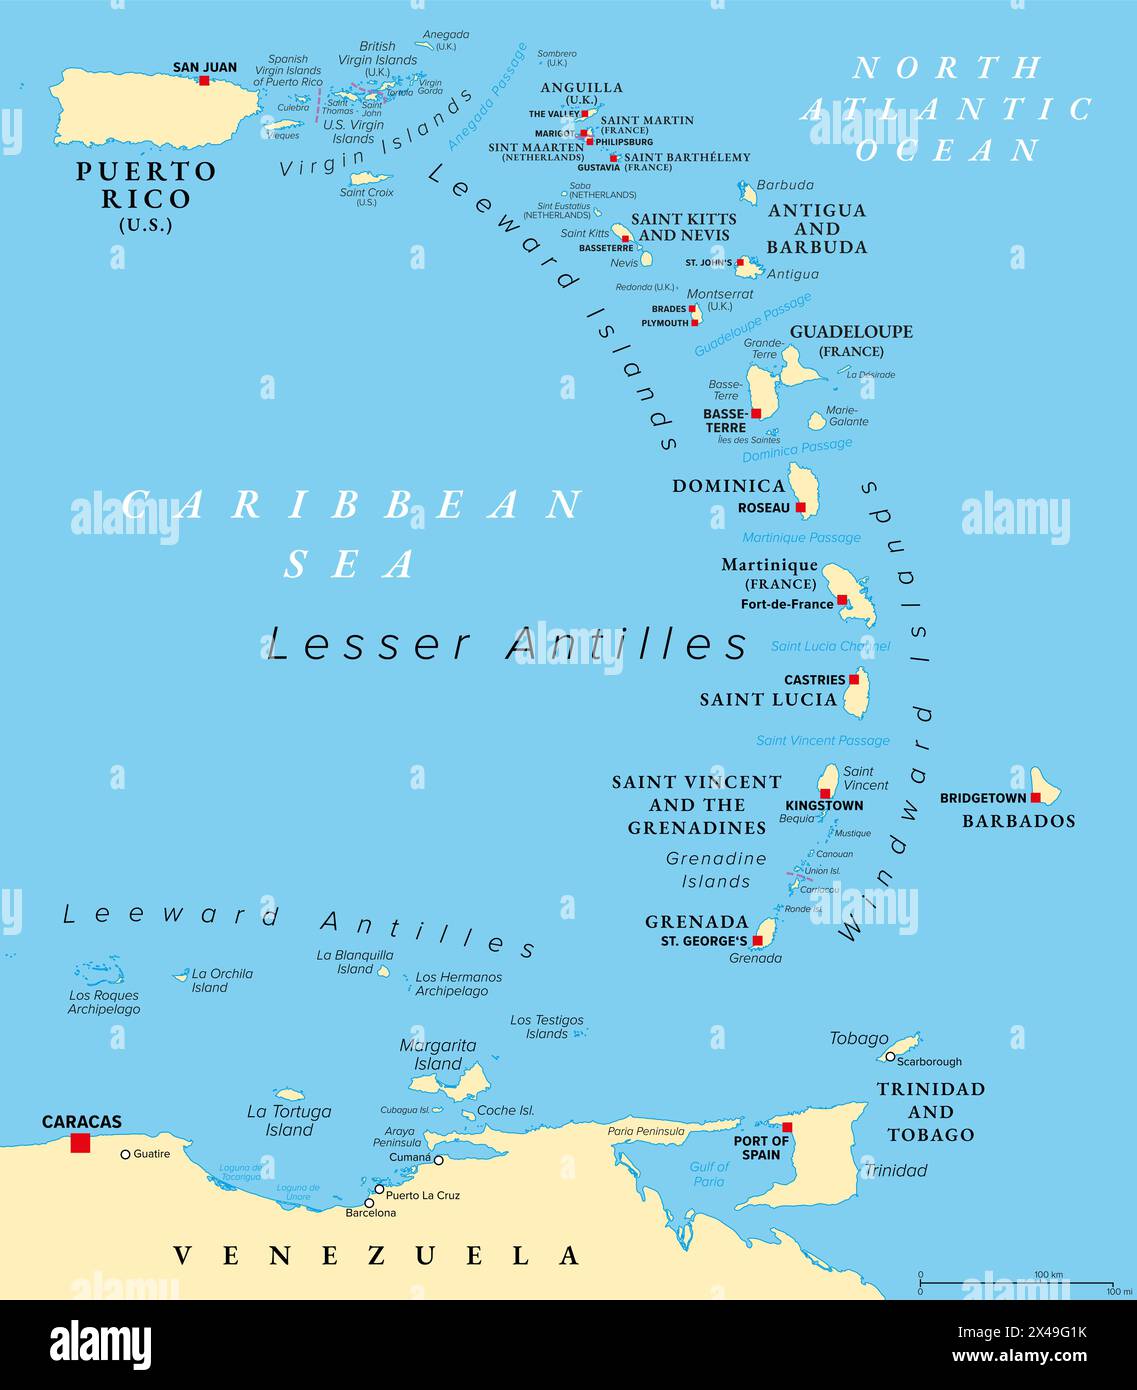 Eastern Caribbean islands, political map. Puerto Rico, Virgin Islands, Leeward and Windward Islands, and part of the Leeward Antilles. Stock Photo